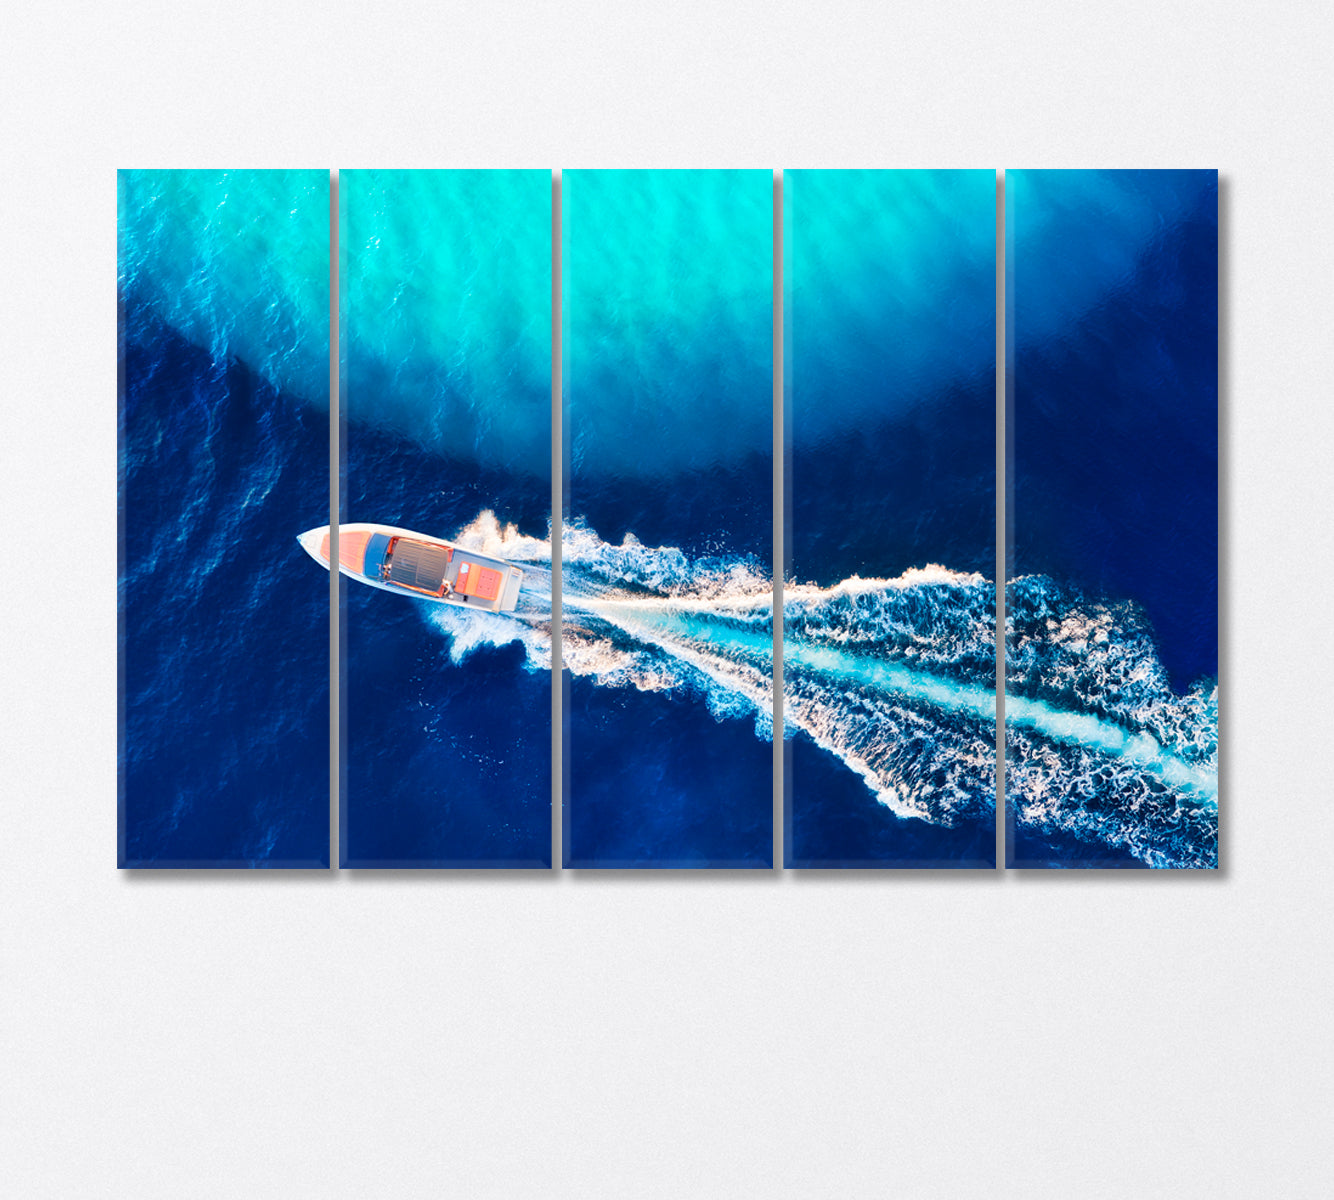 Luxury Motor Boat on the Adriatic Sea Canvas Print-Canvas Print-CetArt-5 Panels-36x24 inches-CetArt